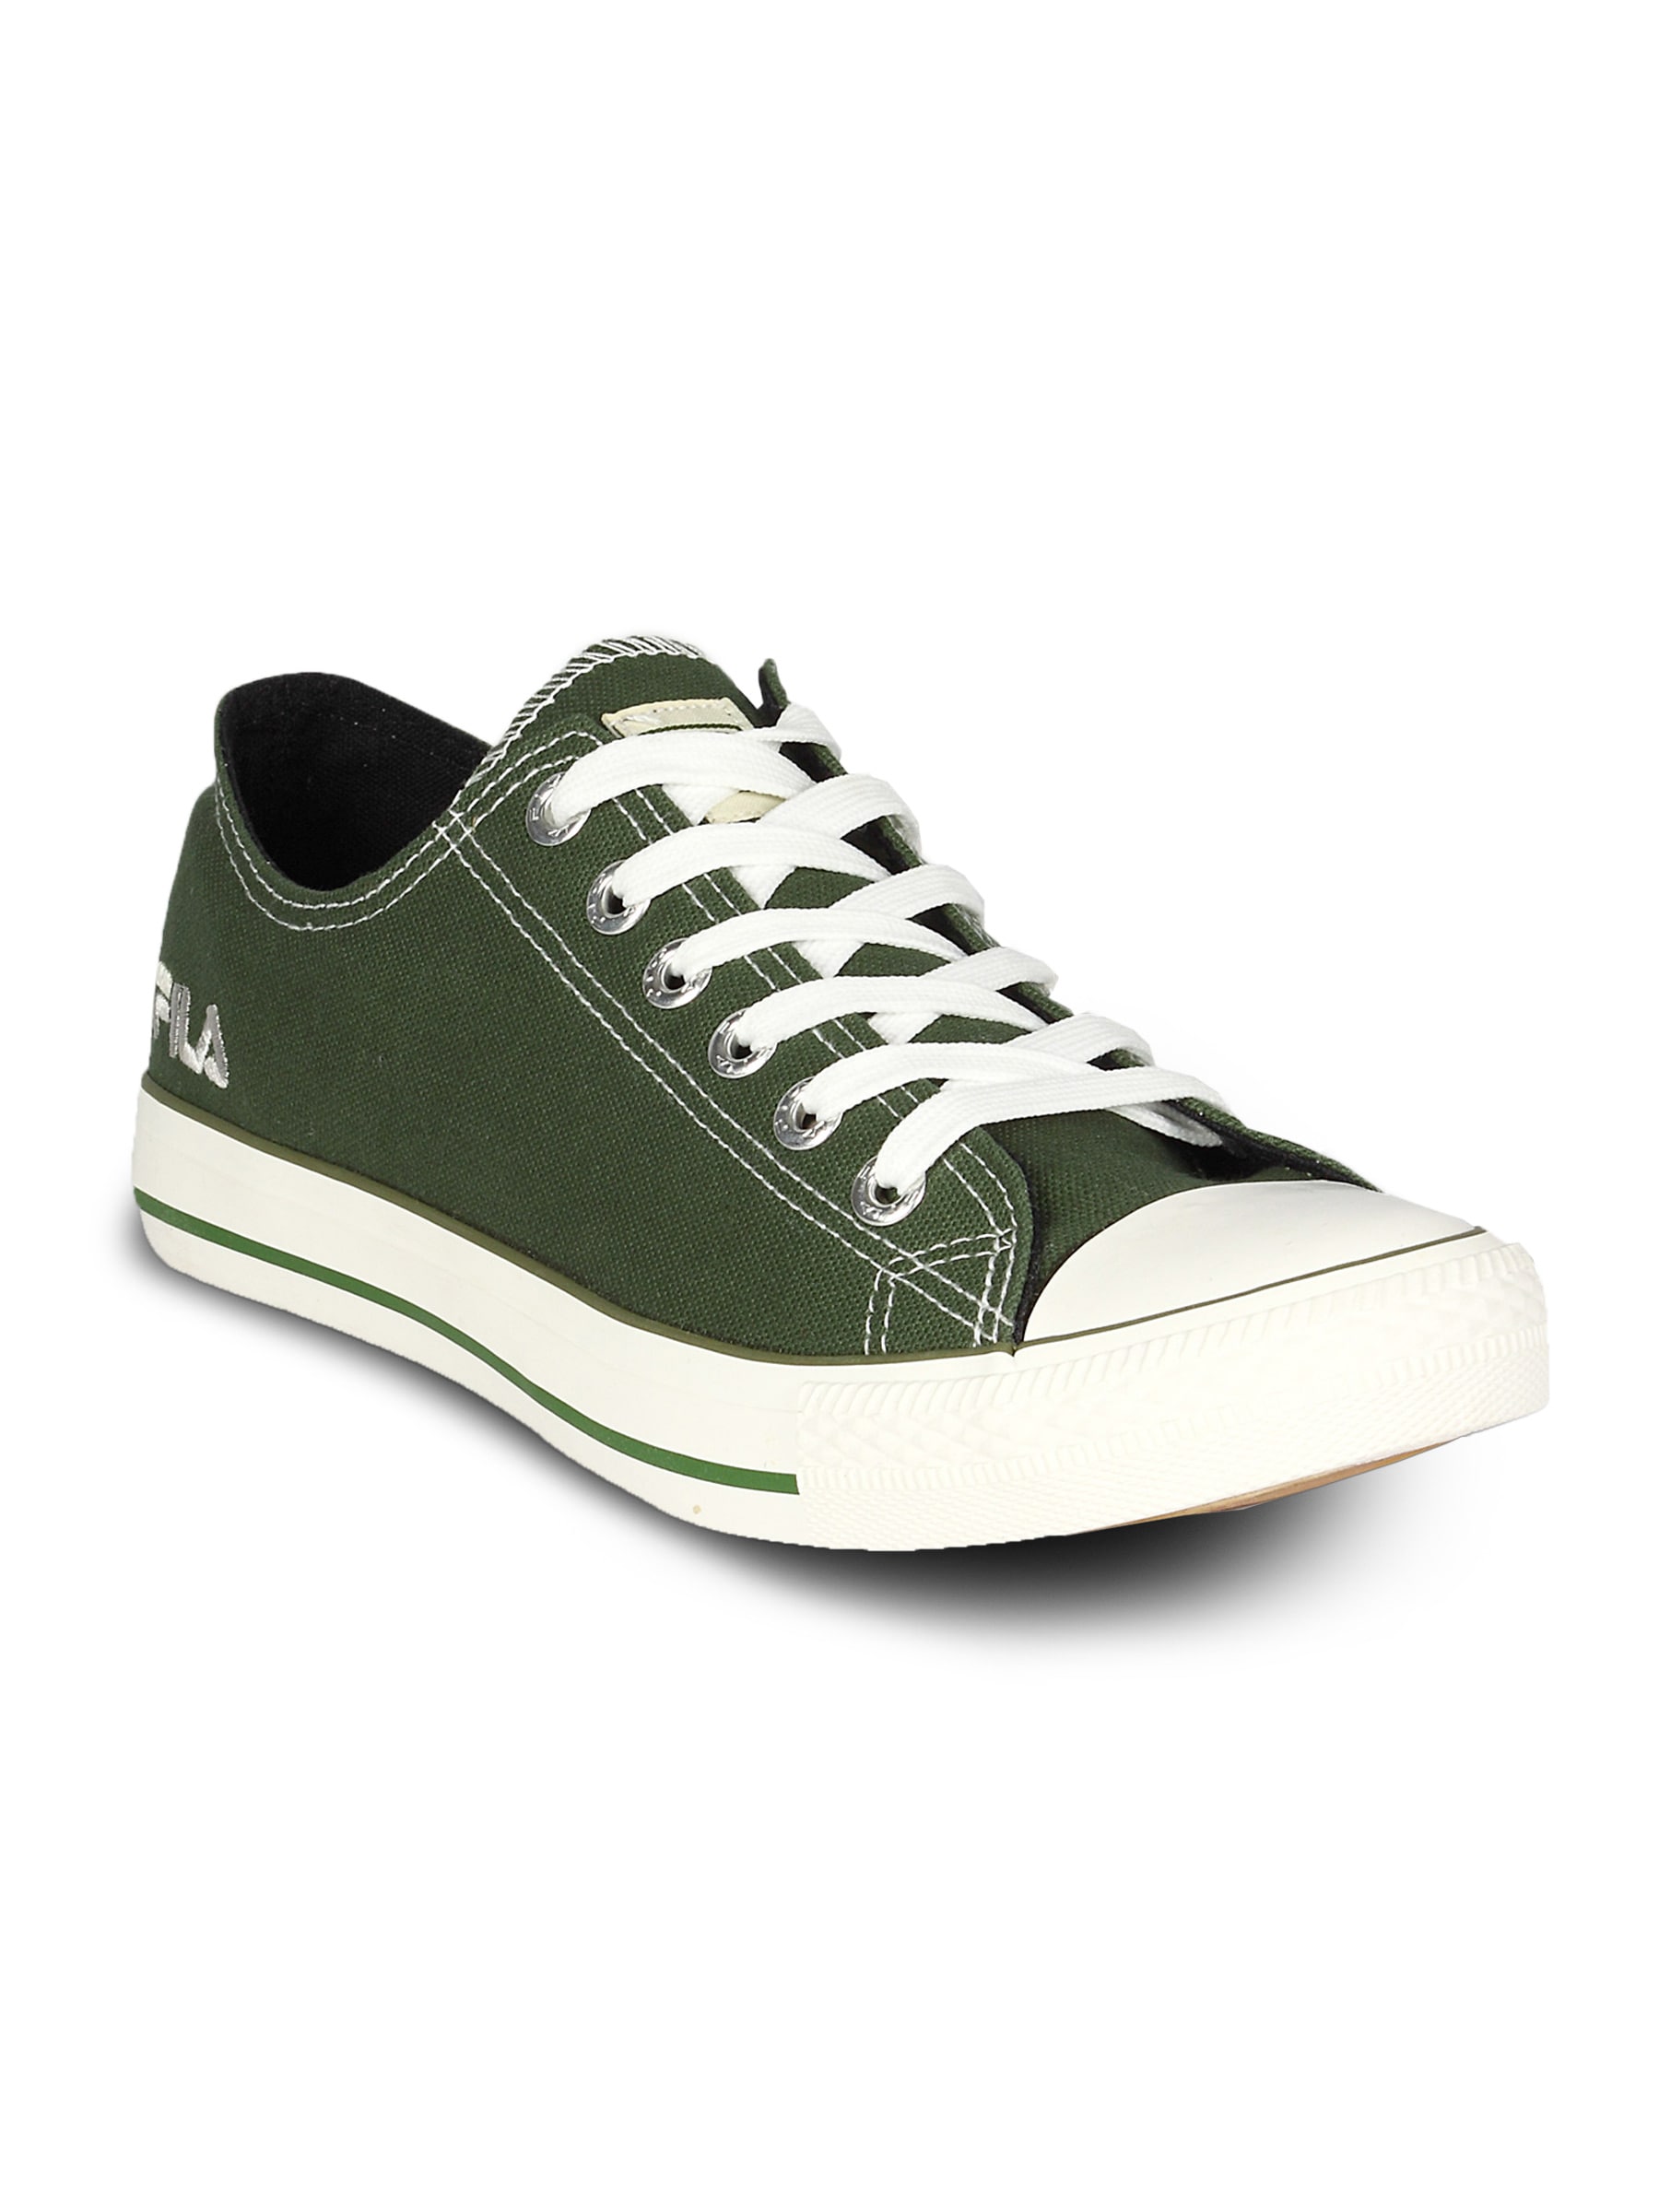 Fila Men's Basic Low Green Shoe